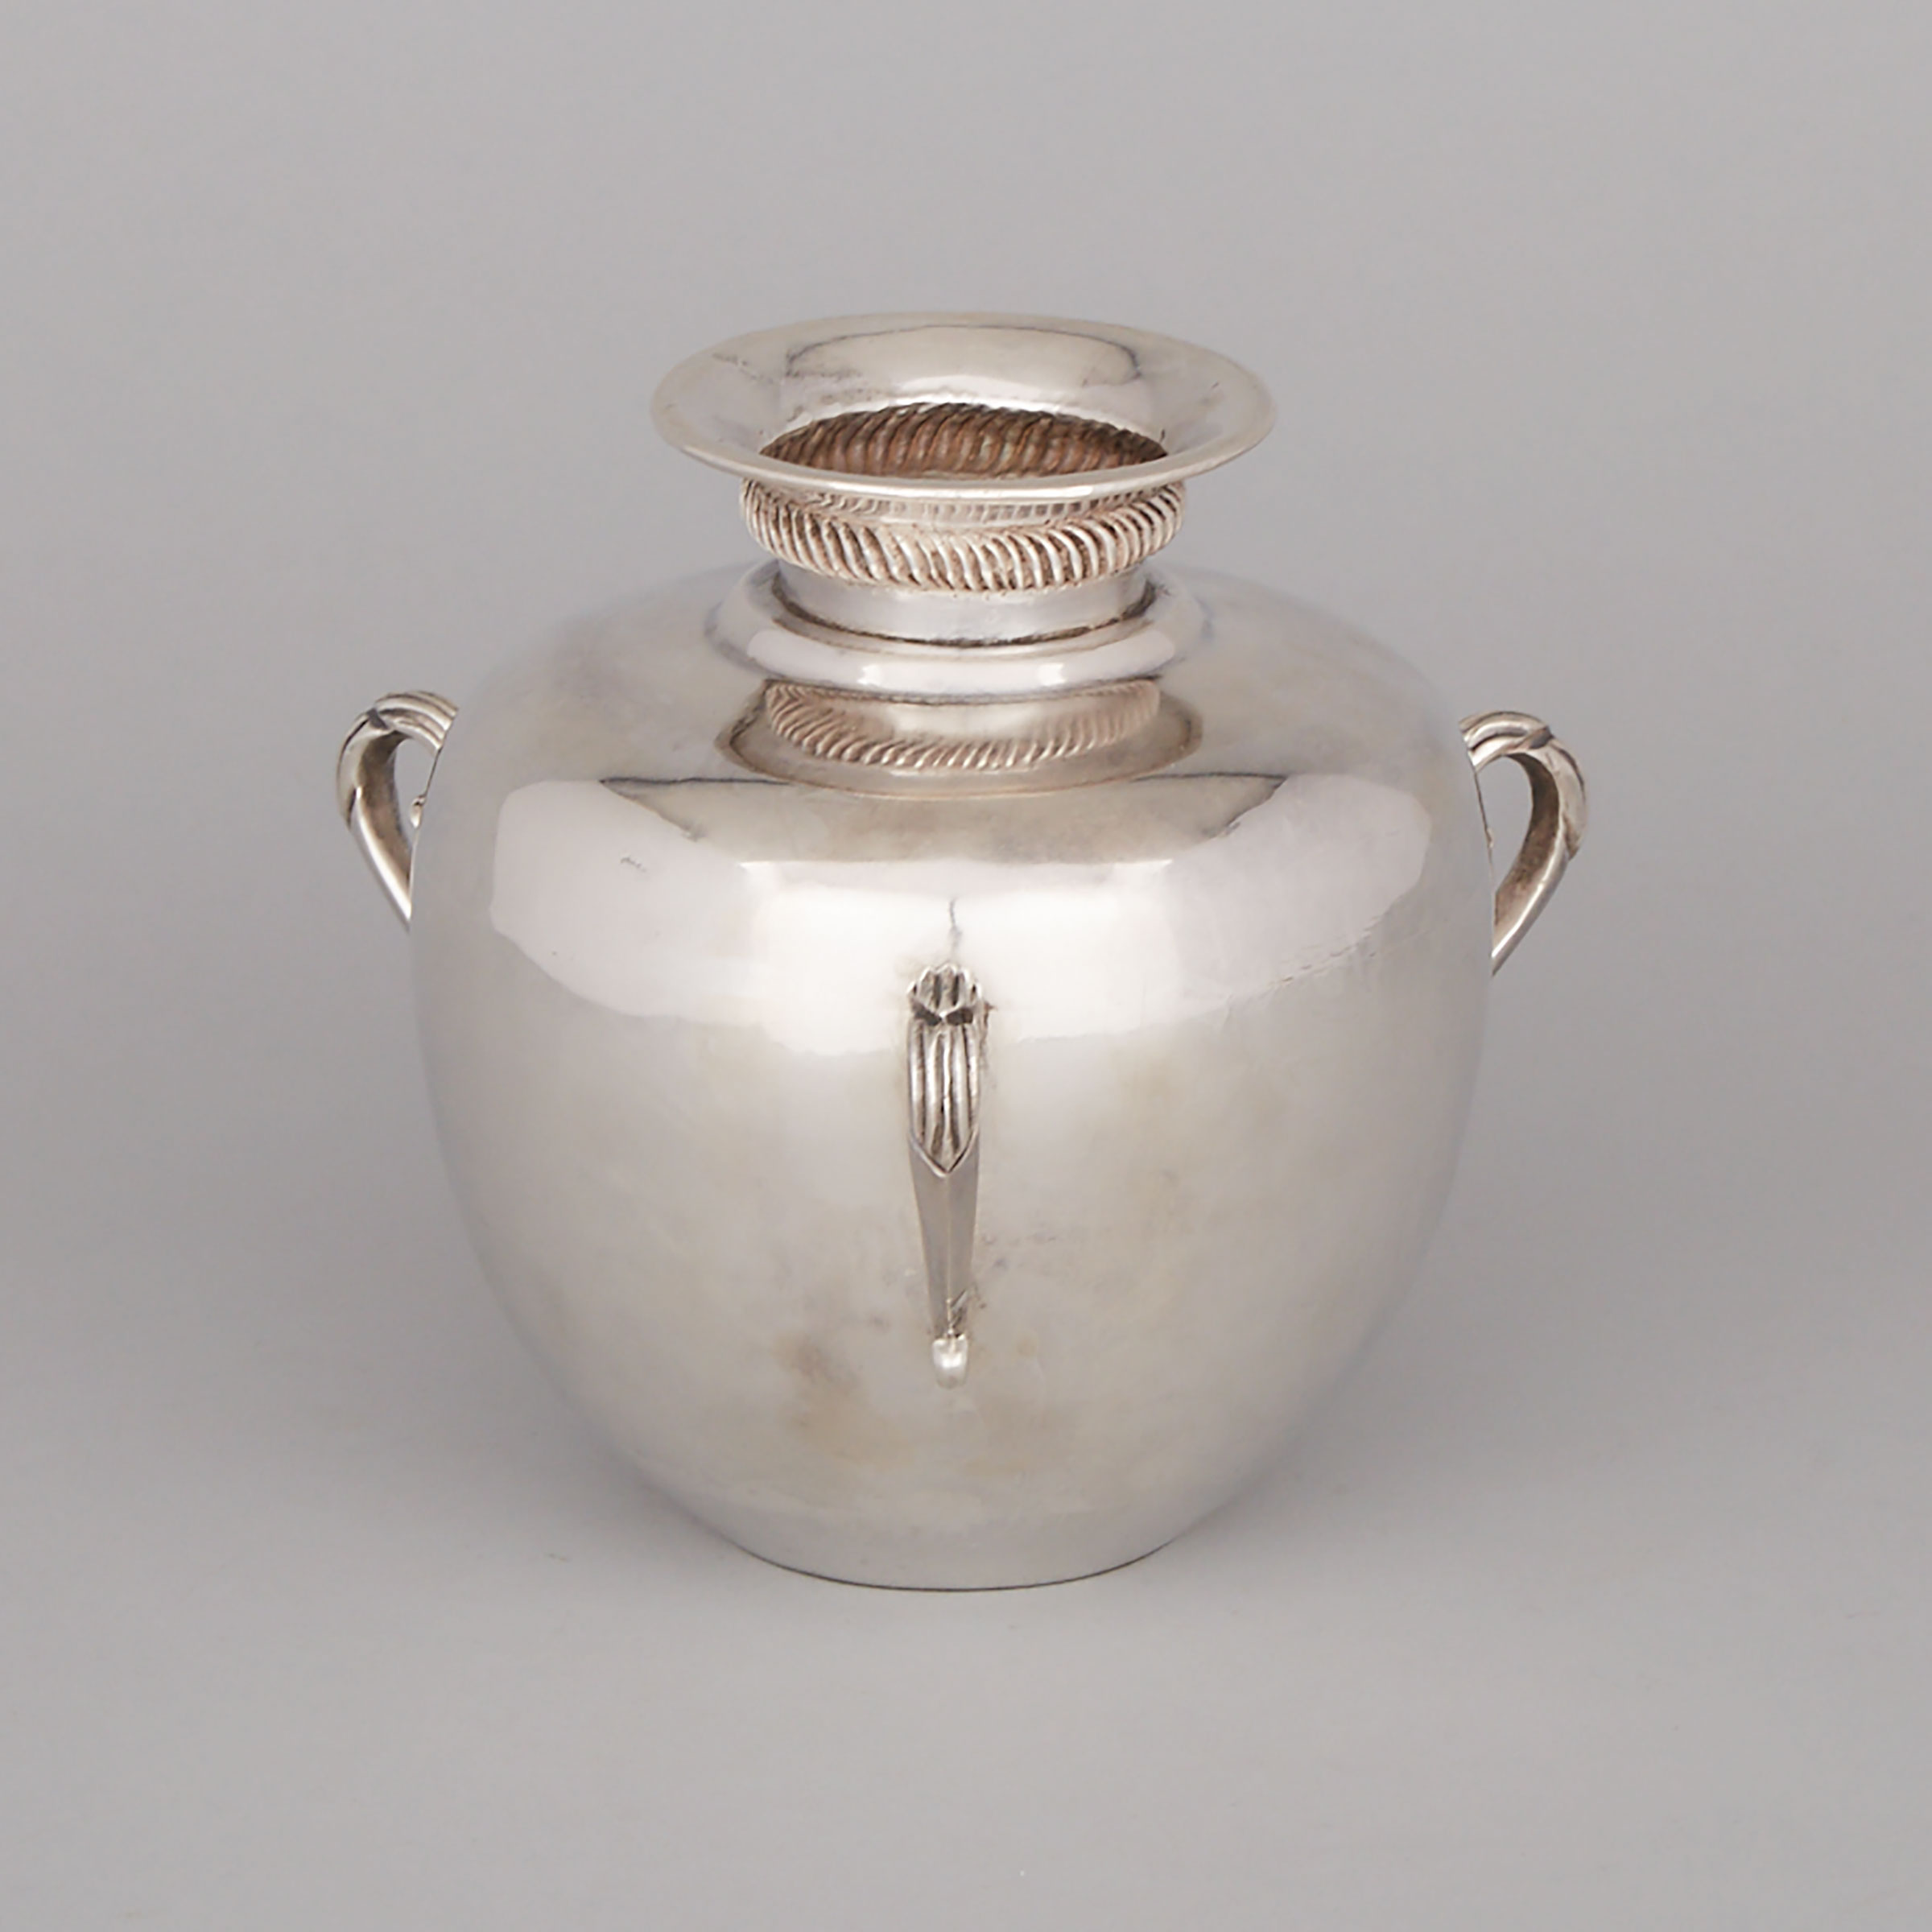 Eastern Silver Three-Handled Vase, 20th century